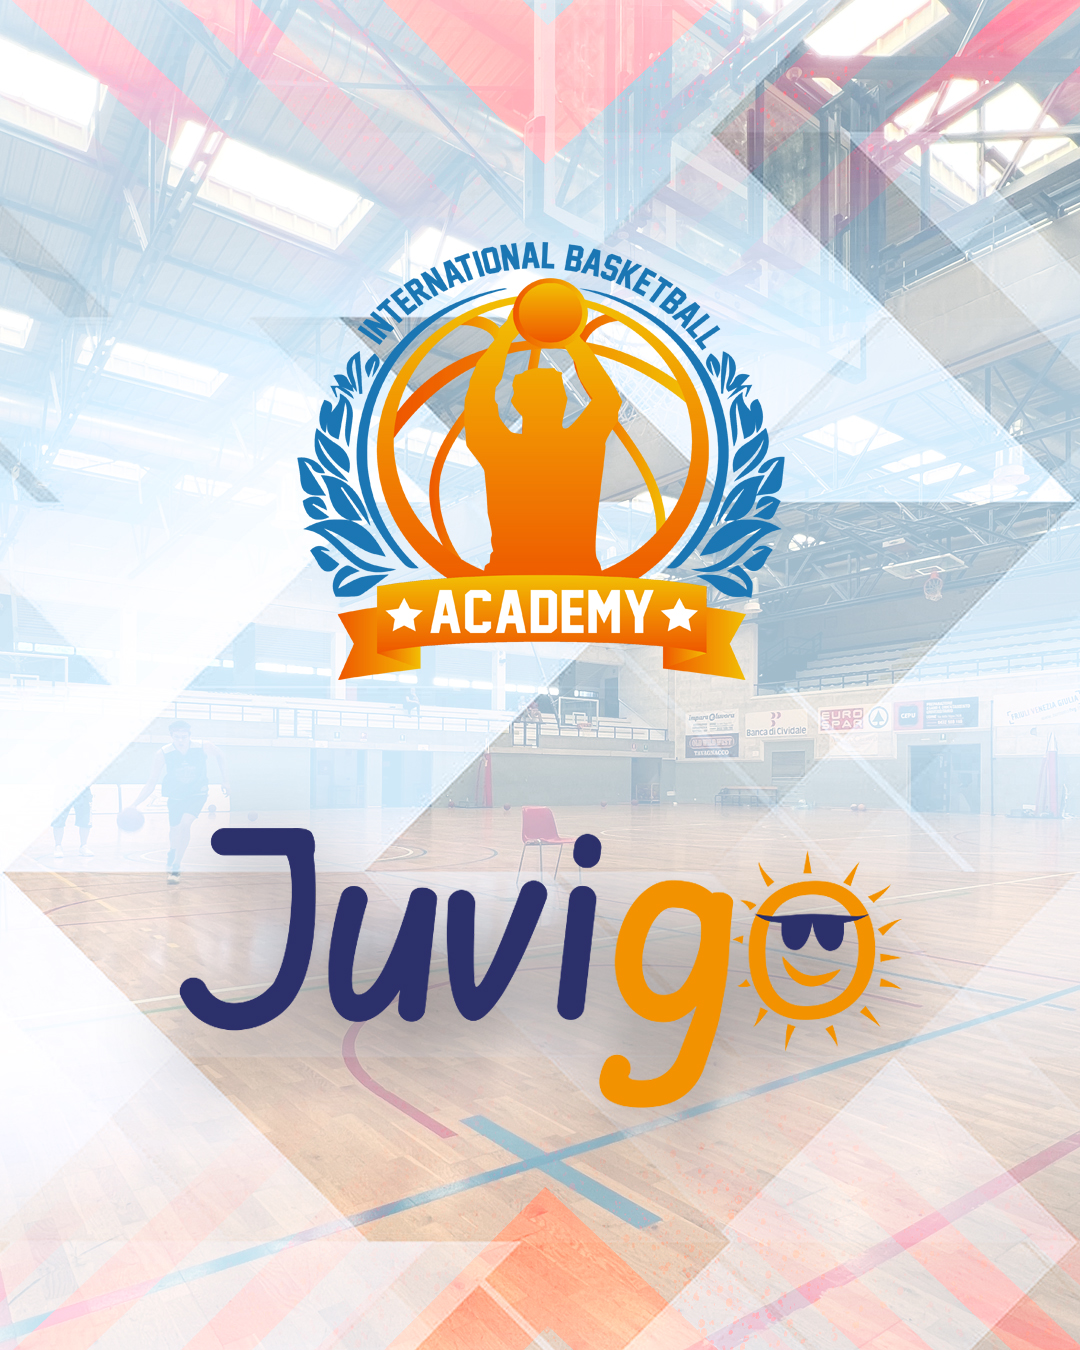 International Basketball Academy and Juvigo are now partners